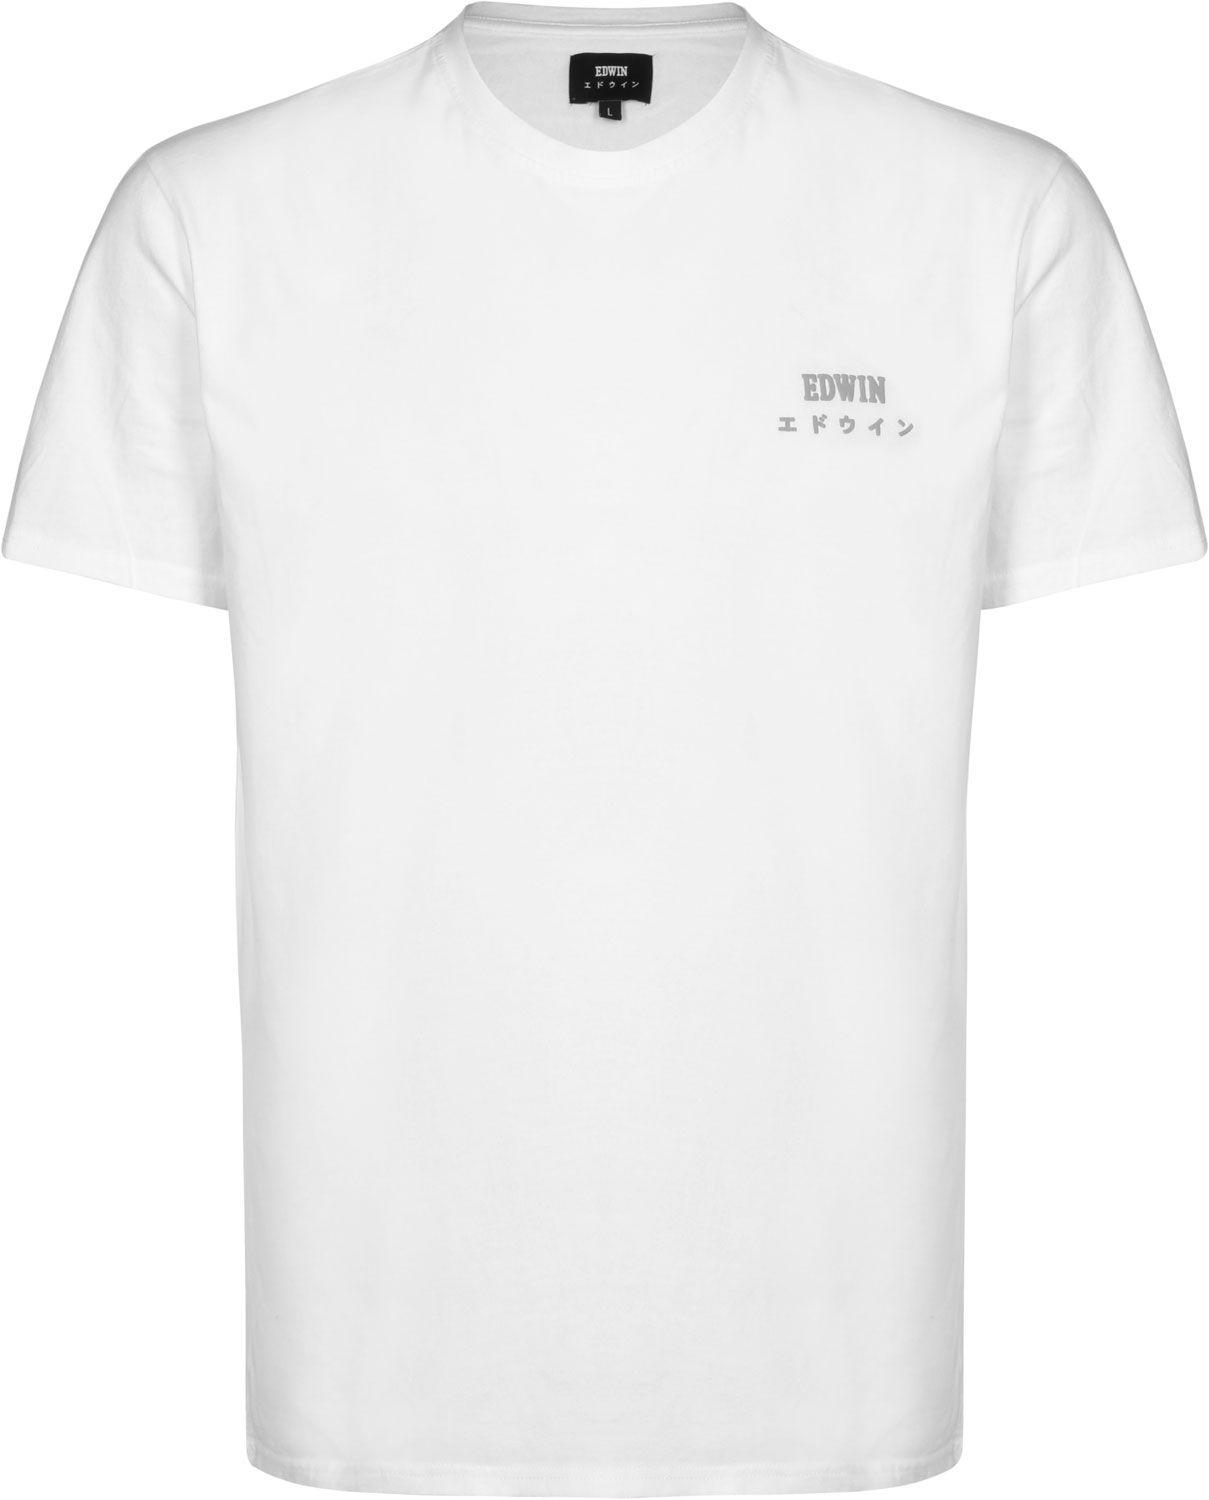 Edwin Logo - Edwin Logo Chest T-shirt white